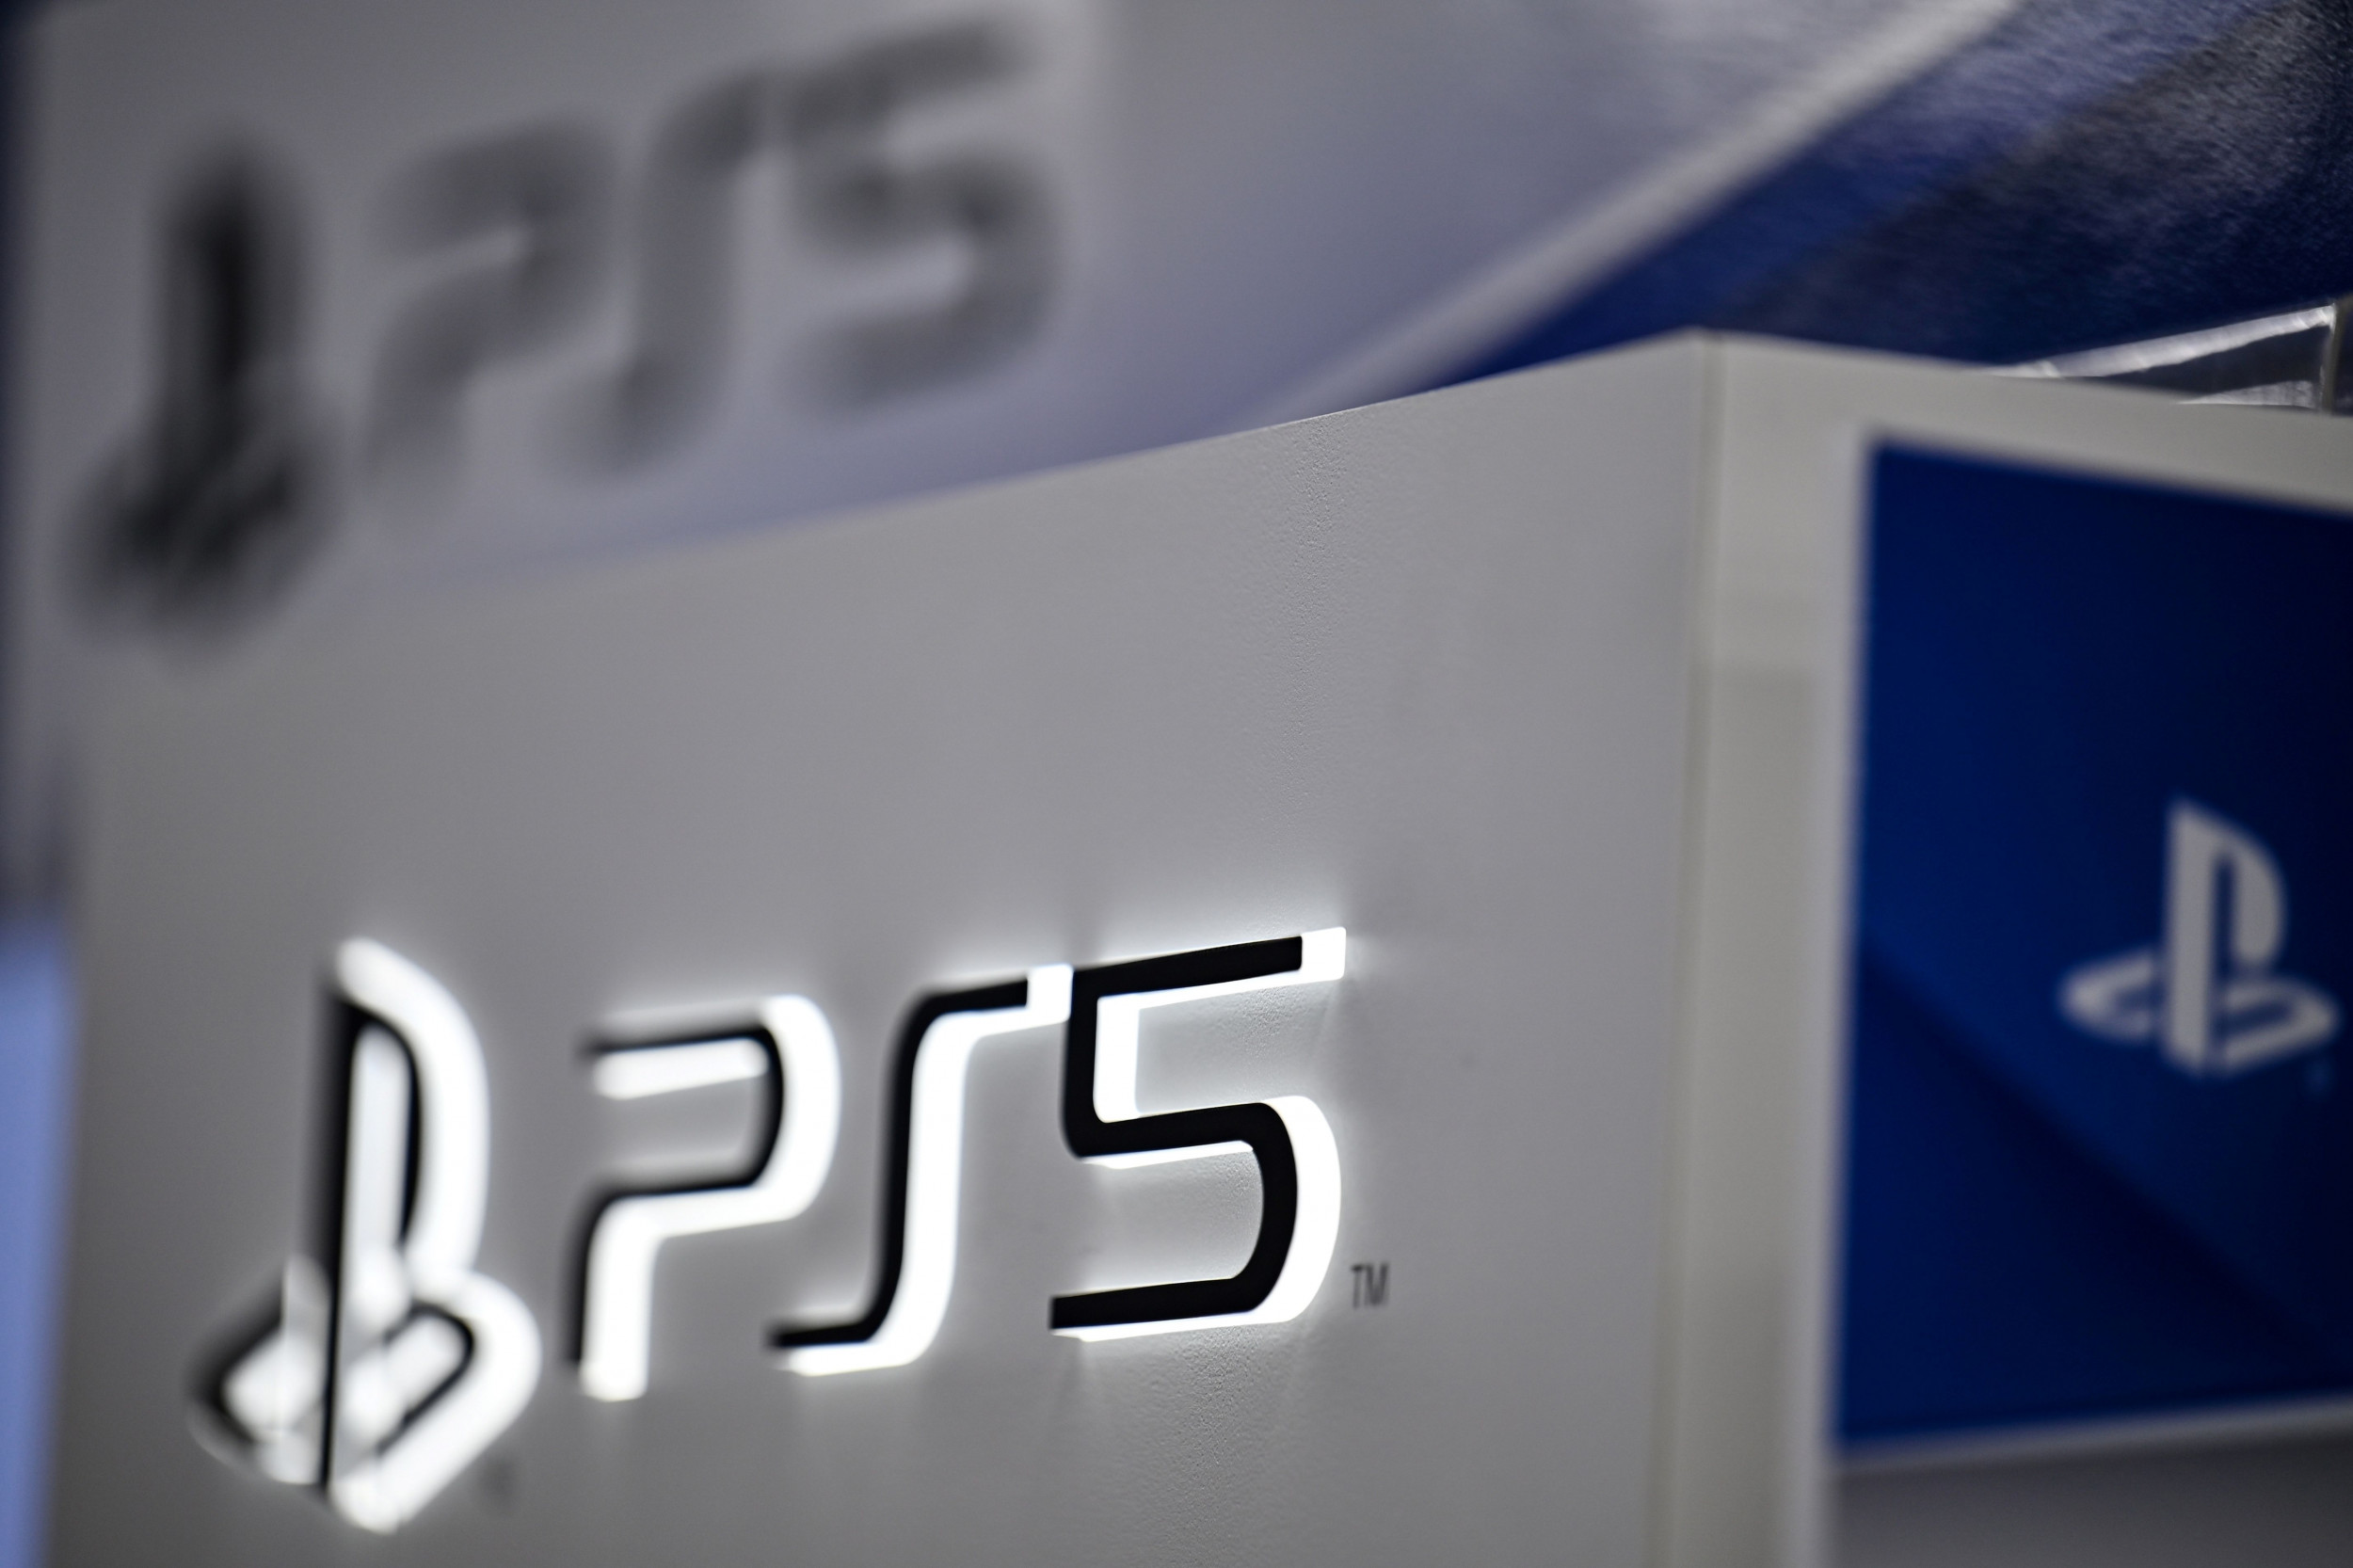 PS5 Restock Update for Amazon, Best Buy, Newegg, Walmart and more